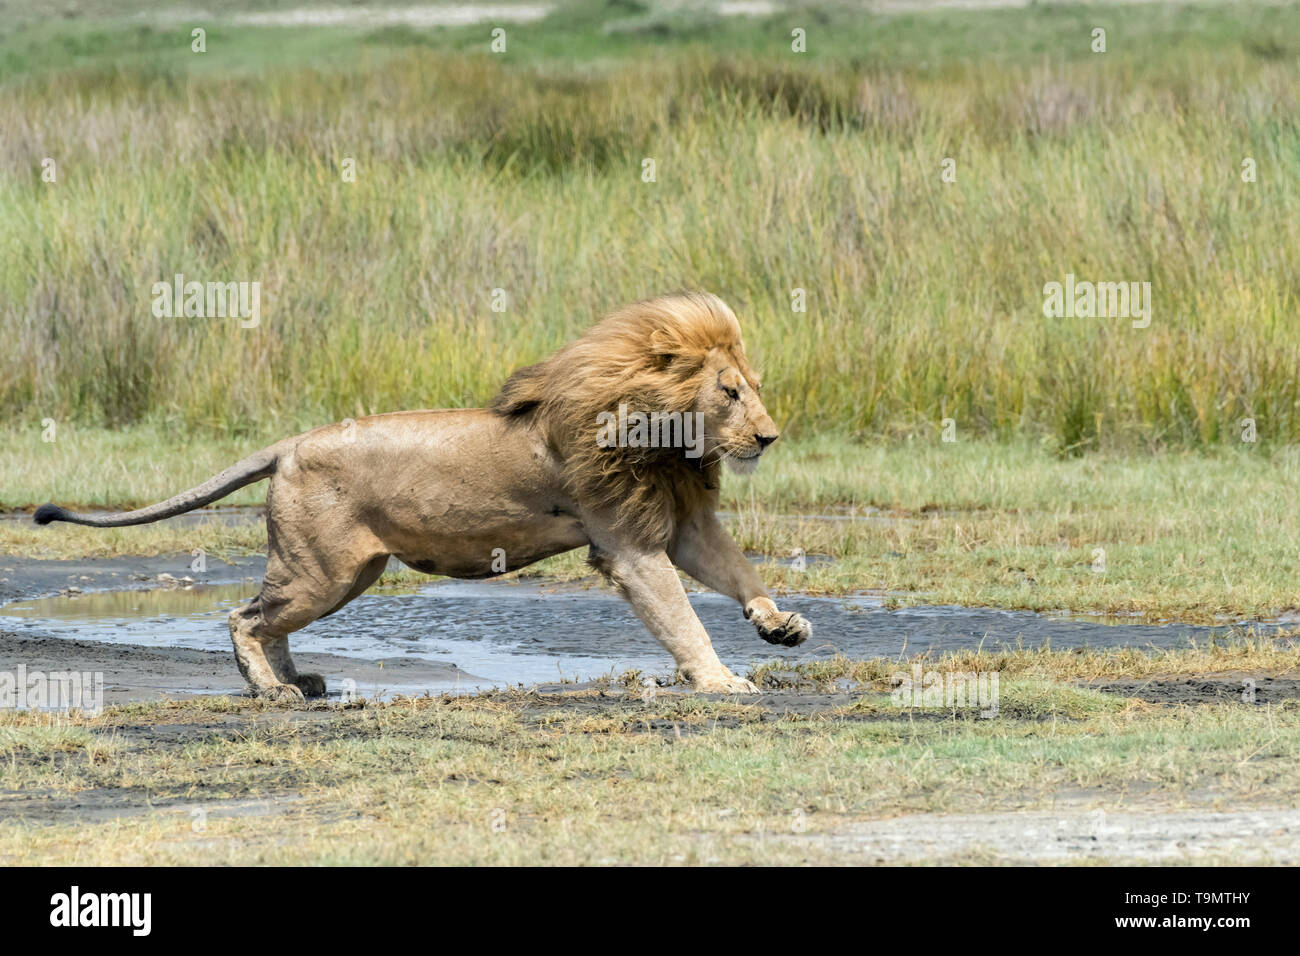 Well-fed lion on the move by the lush grasses, Lake Ndutu, Tanzania Stock Photo